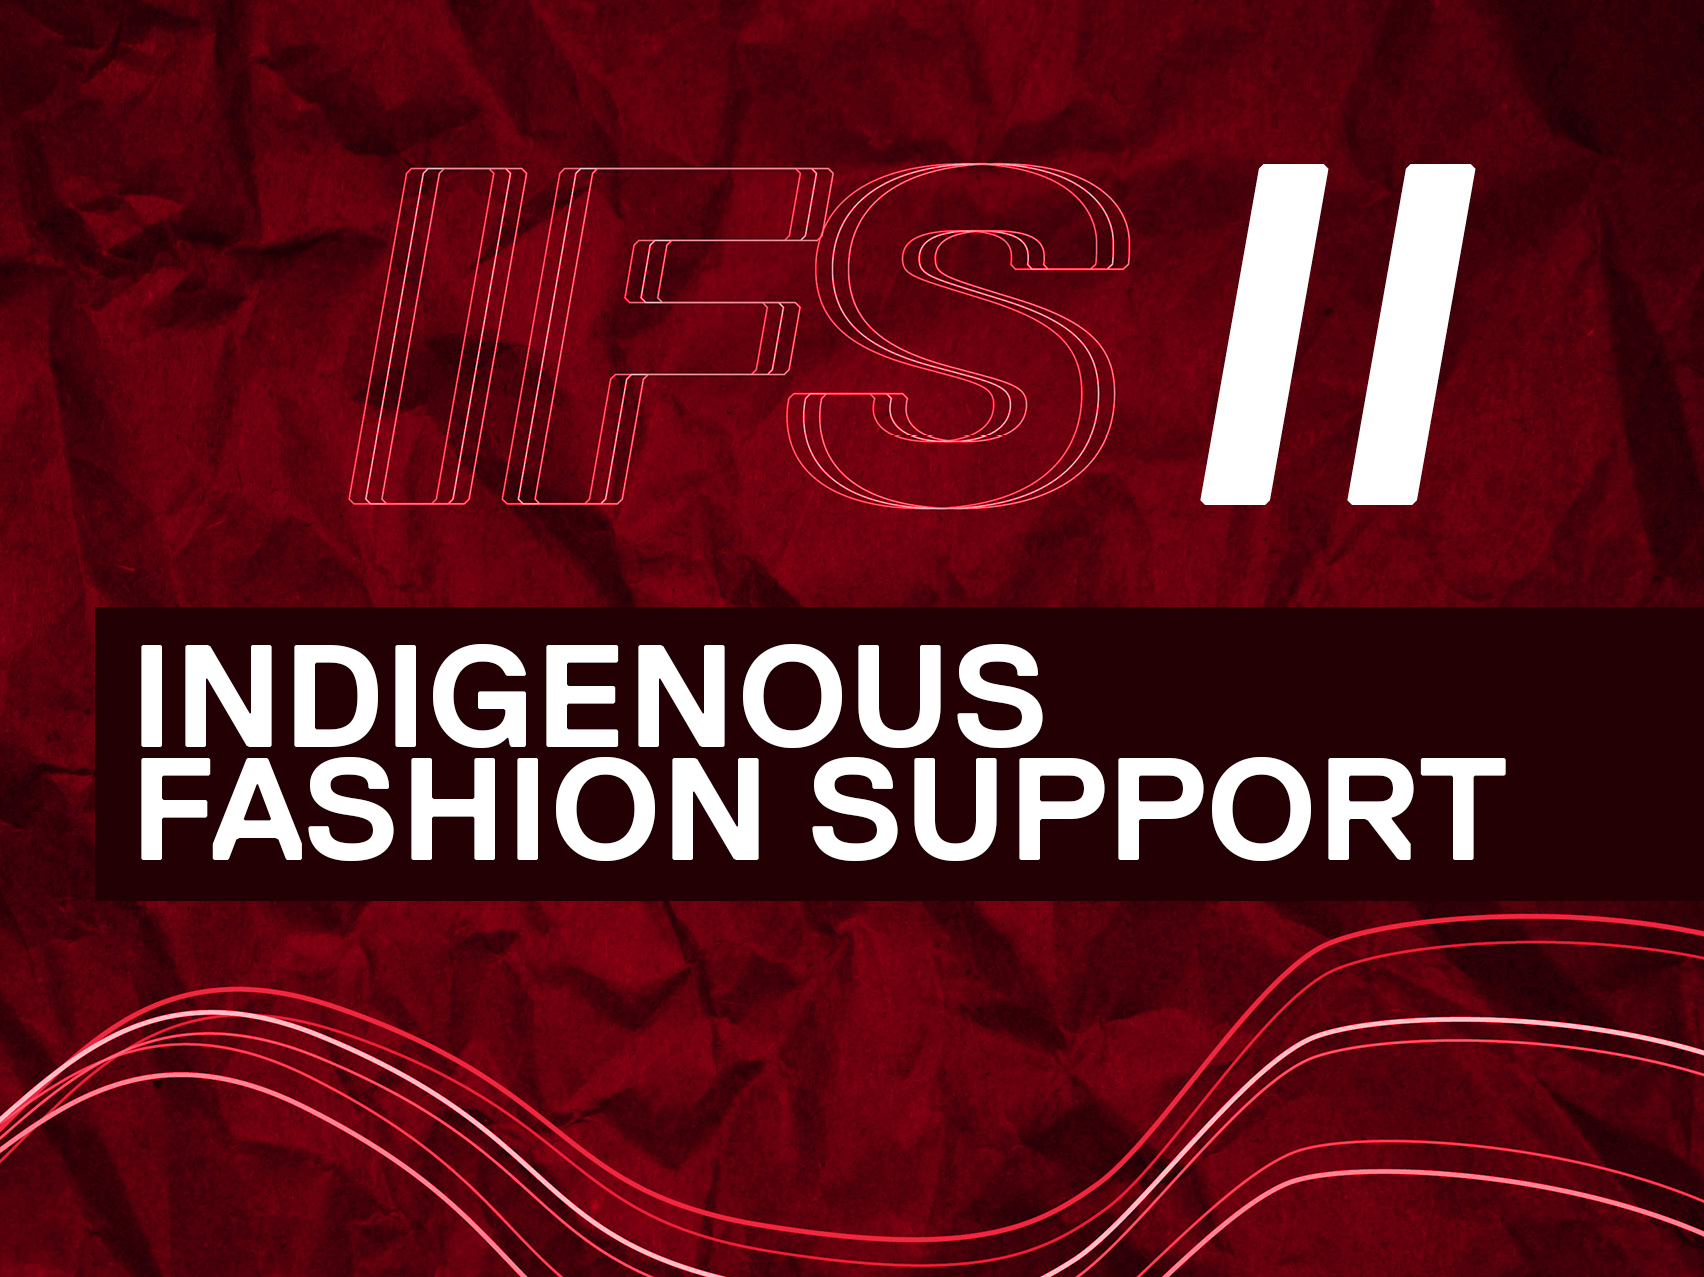 Indigenous fashion support program branding